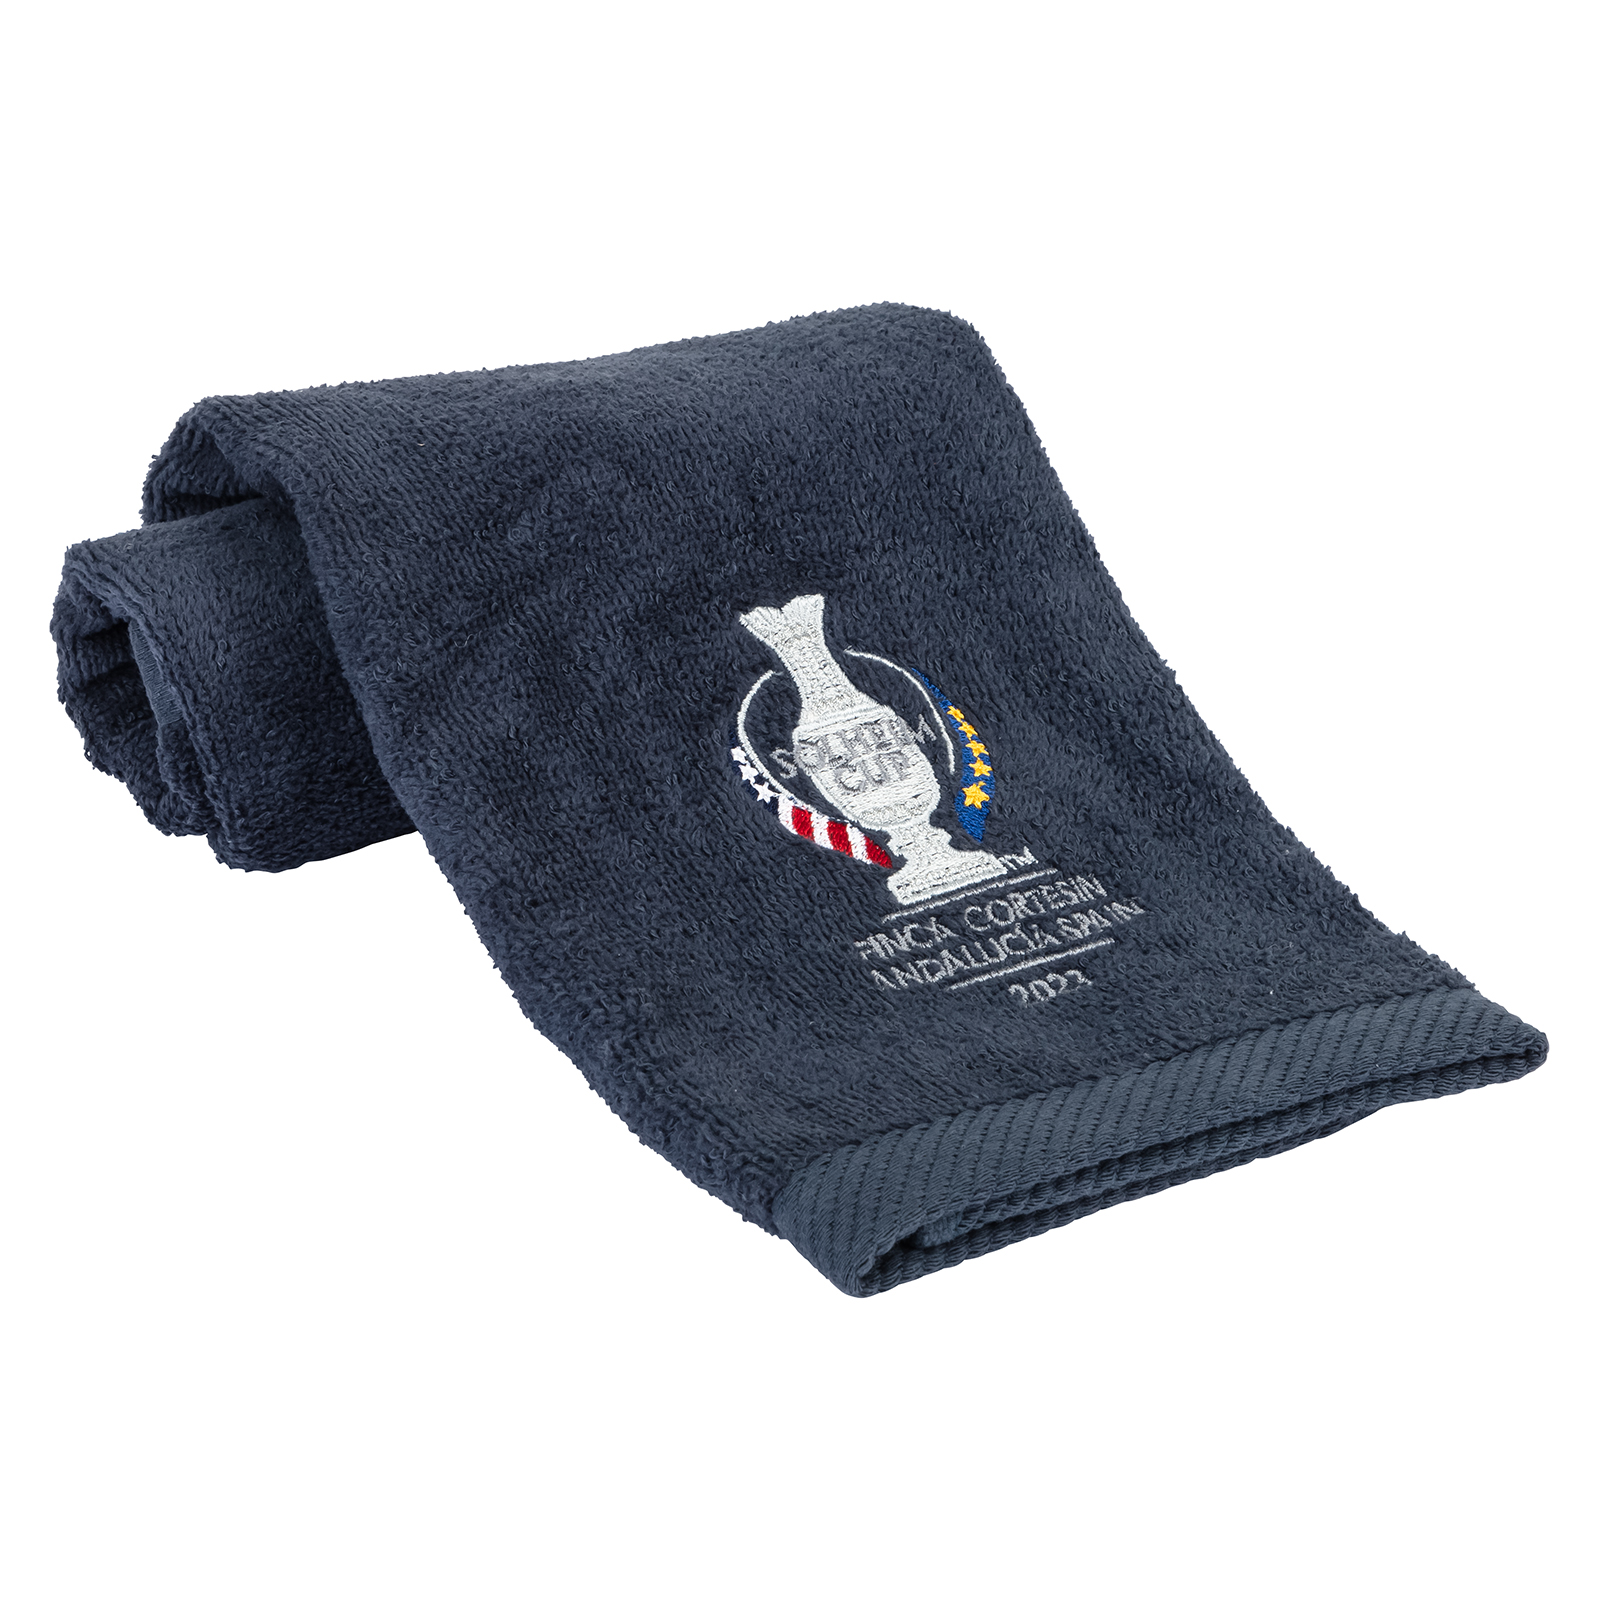 Soft cotton golf towel in Solheim Cup design 